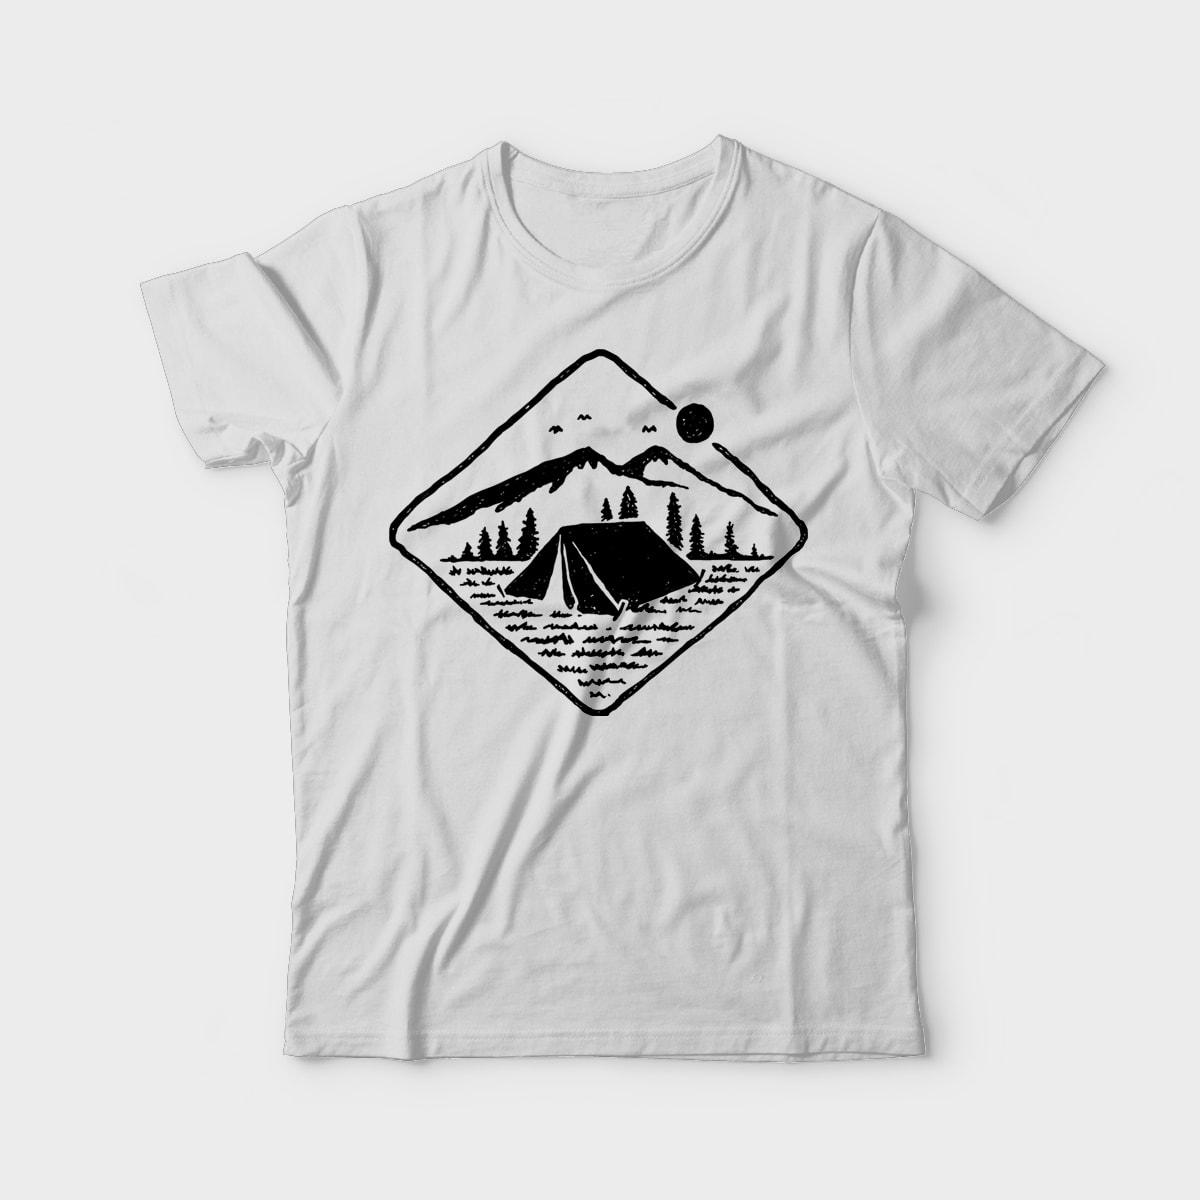 Camp Mode On buy t shirt designs artwork